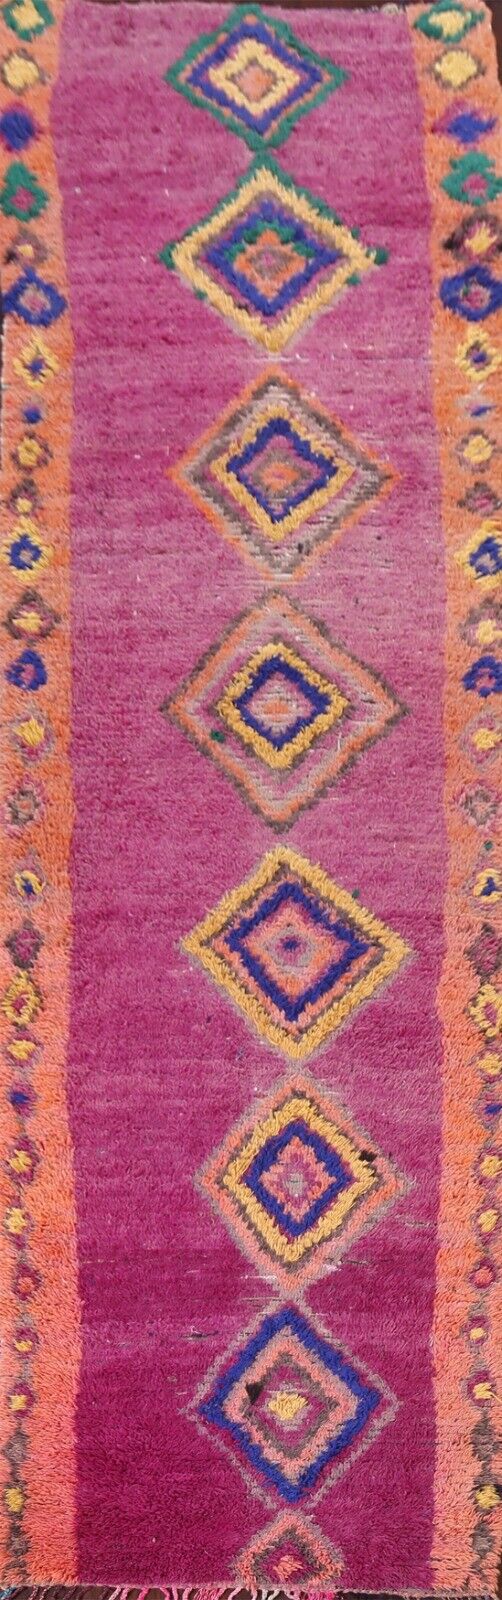 Vintage Moroccan Geometric Tribal Oriental Runner Rug Hand-knotted PURPLE 4'x13'